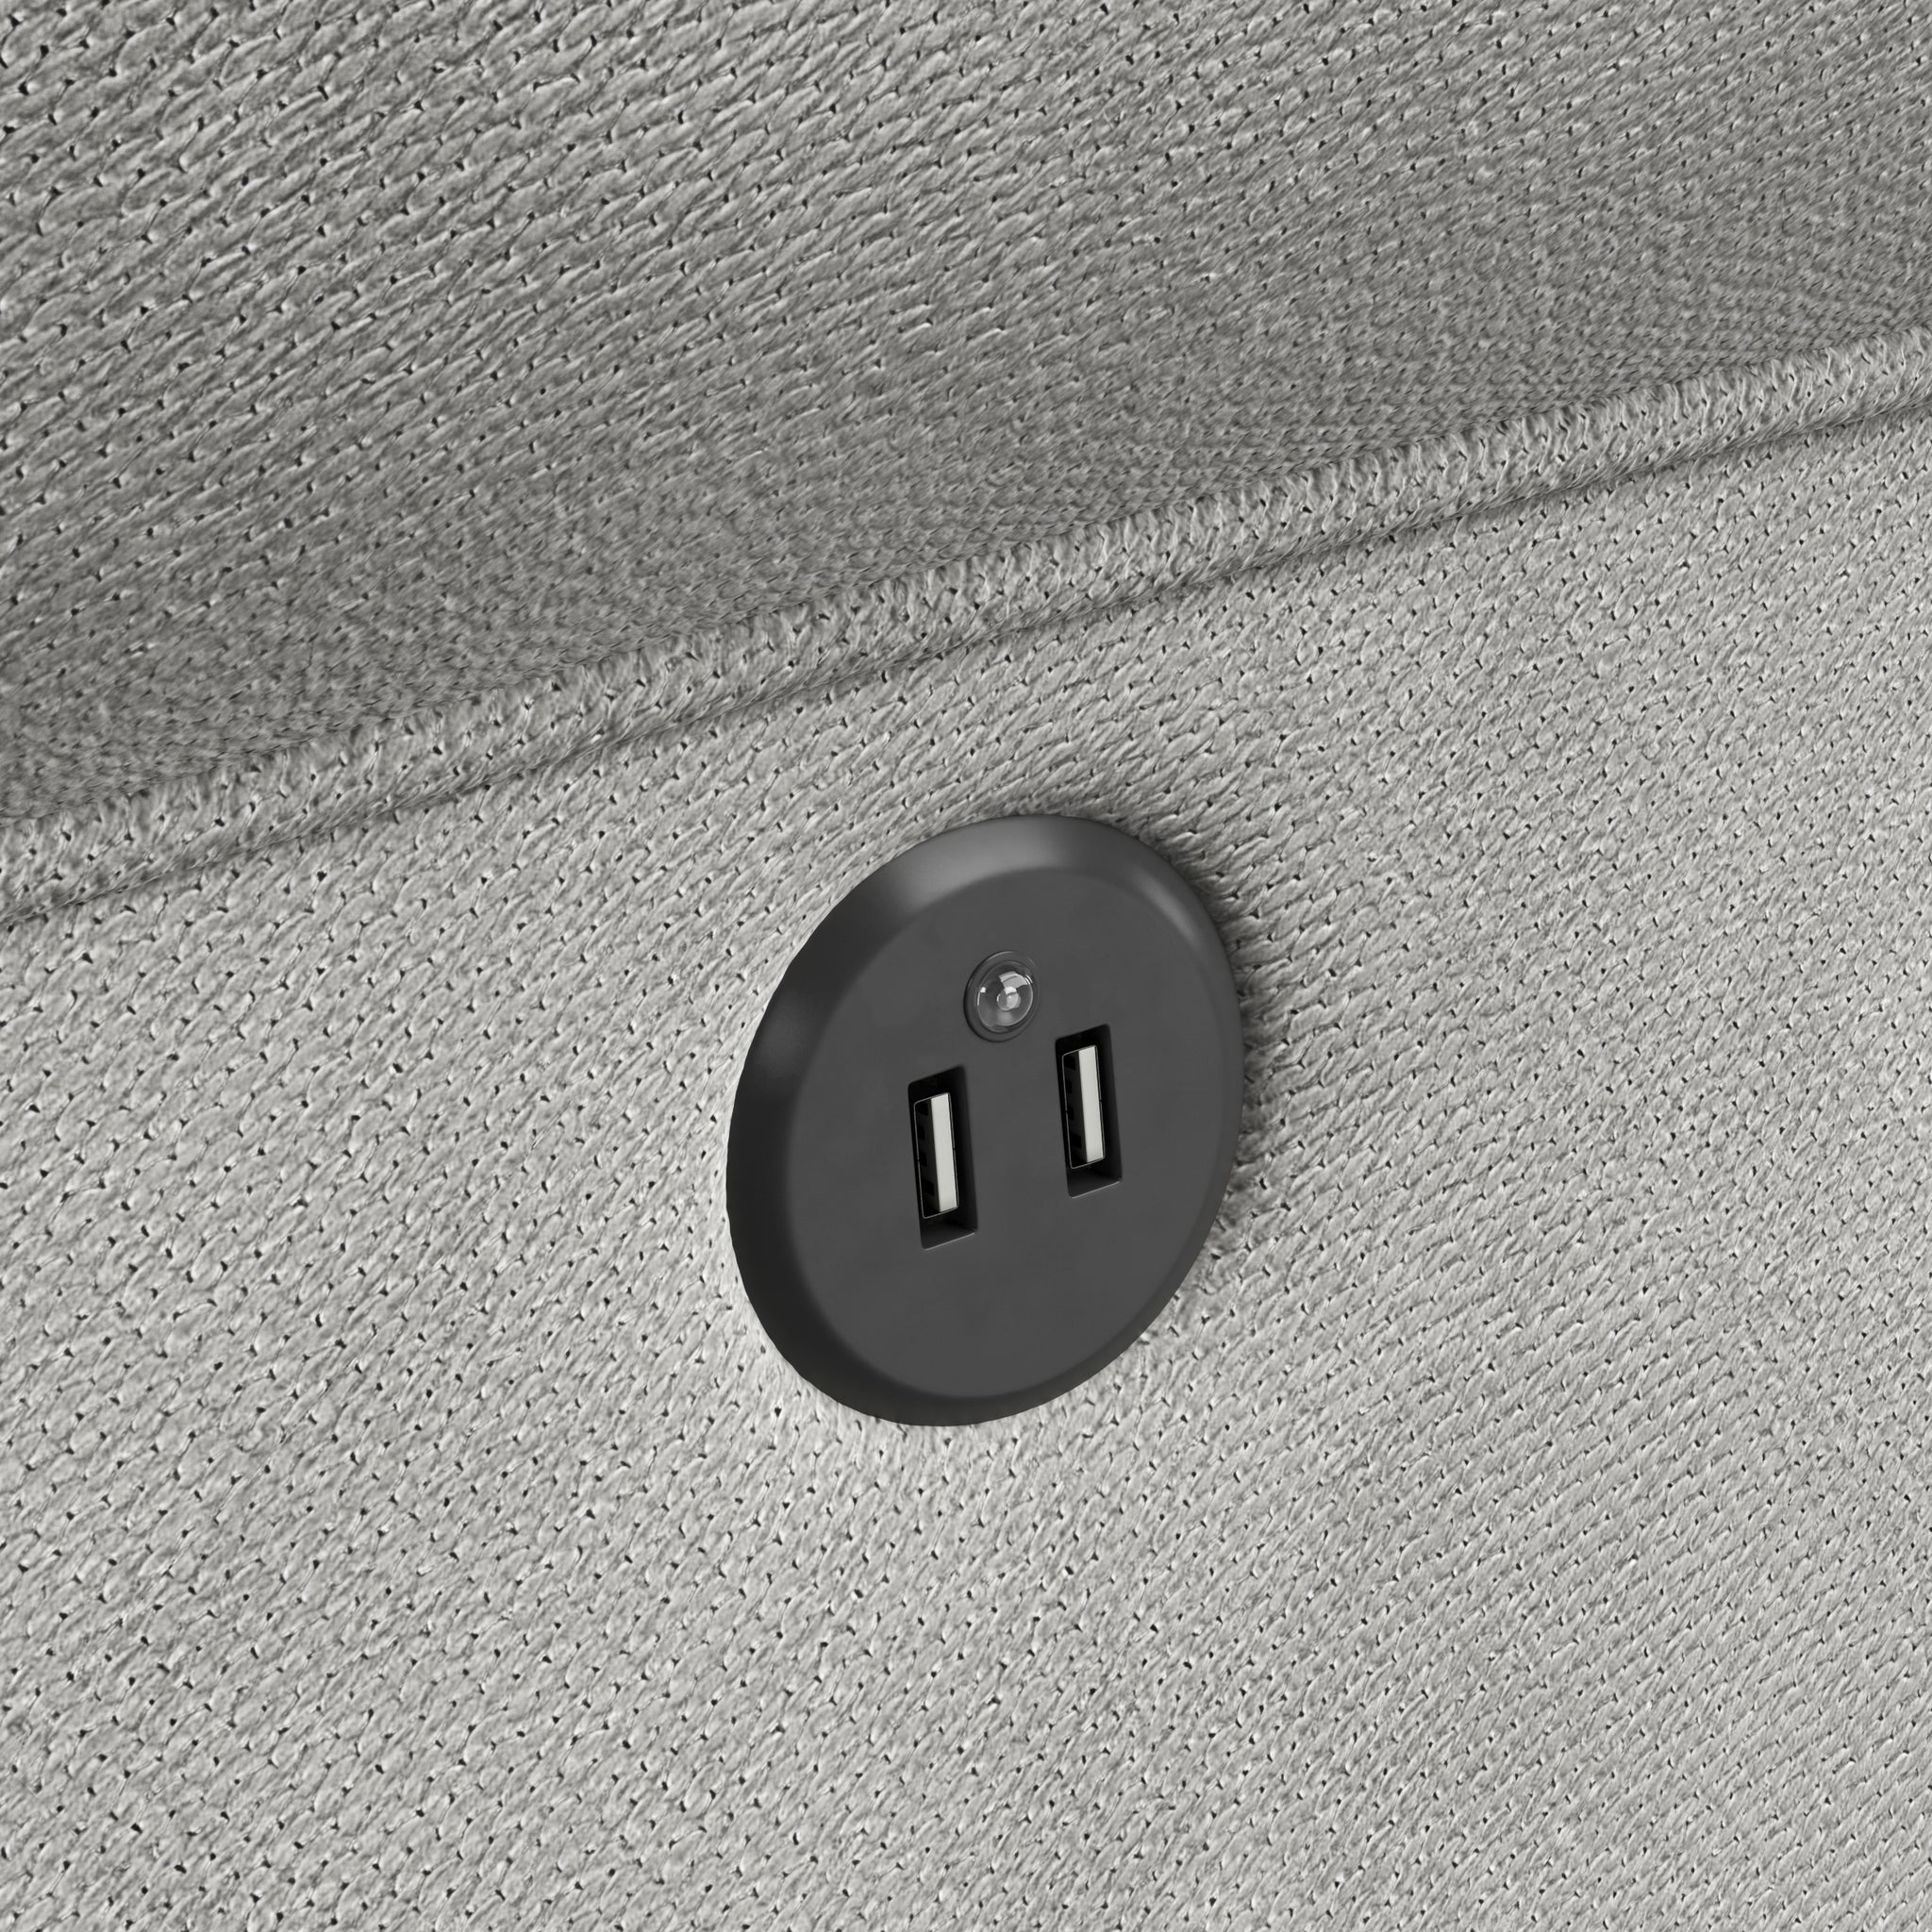 Steel reclining glider USB charging port close-up 